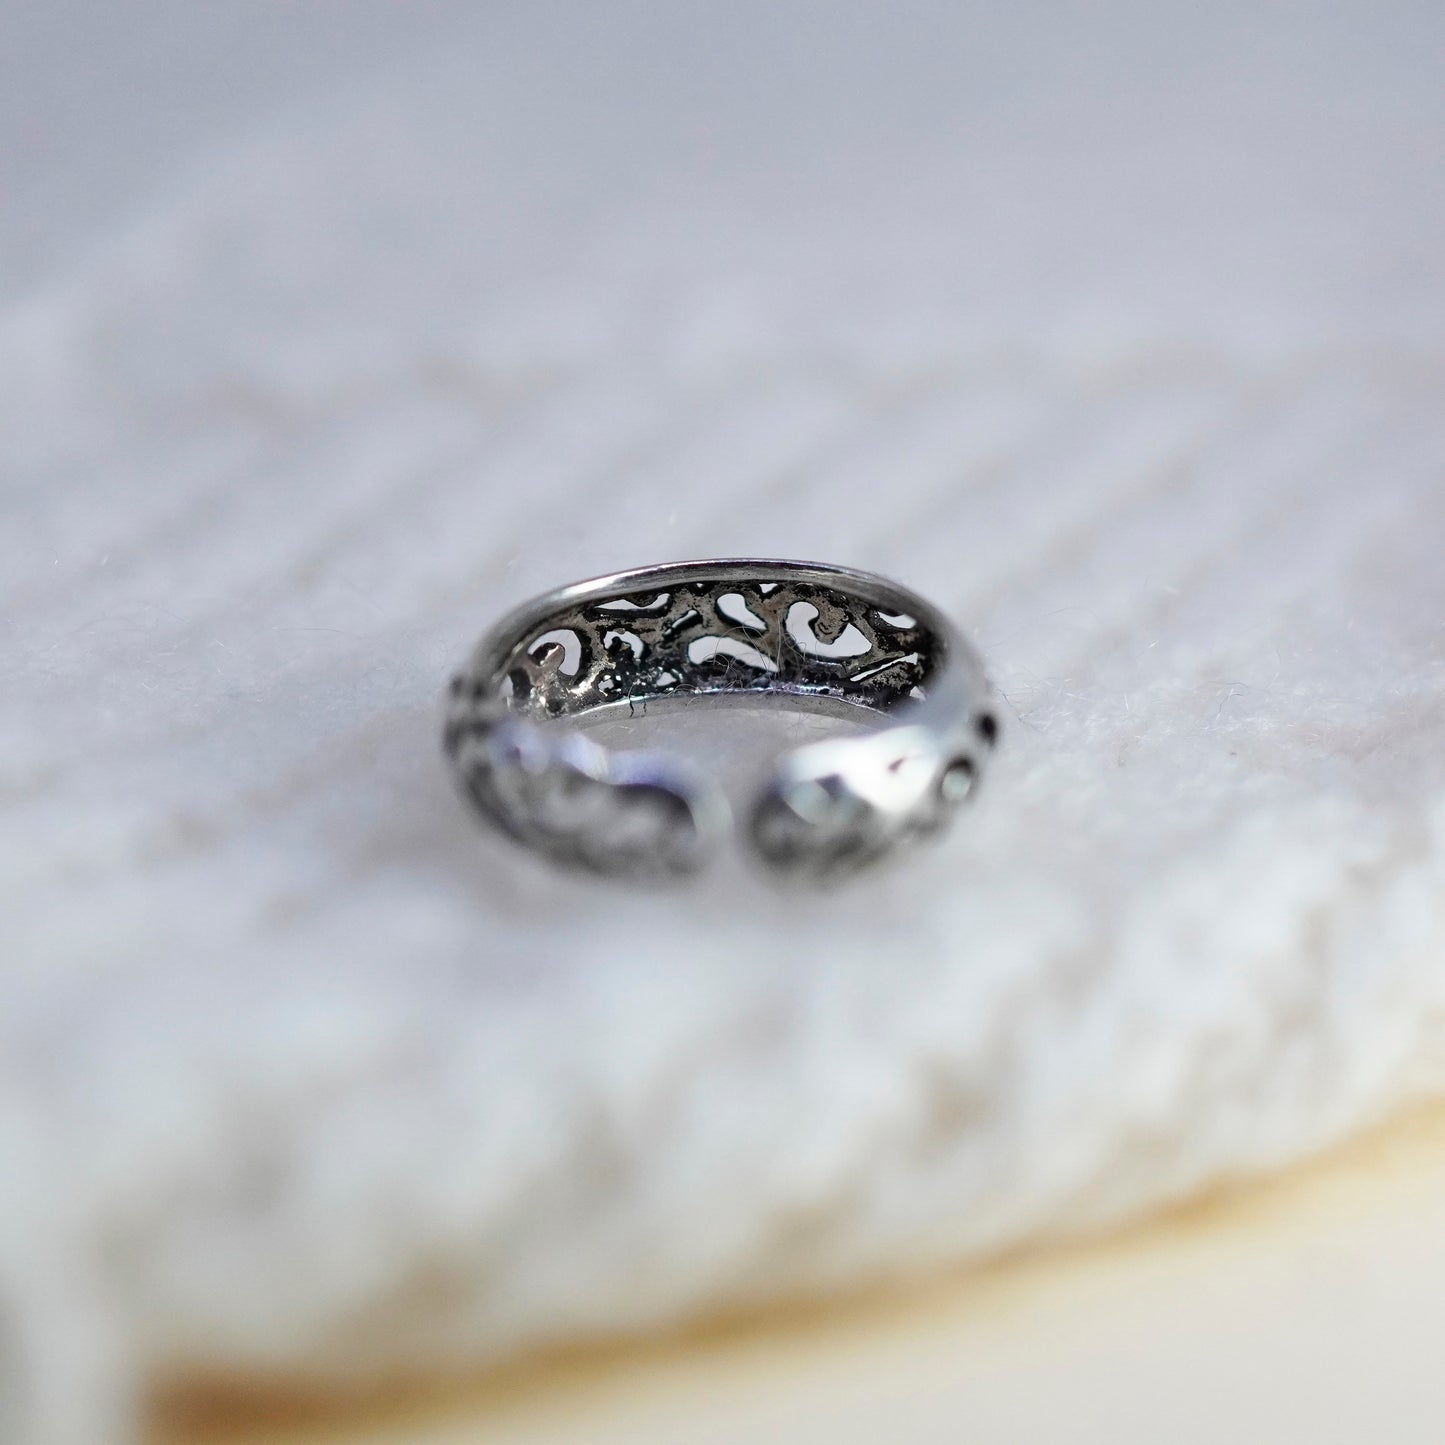 Size 1.75, vintage Sterling silver handmade ring, 925 filigree swirl band